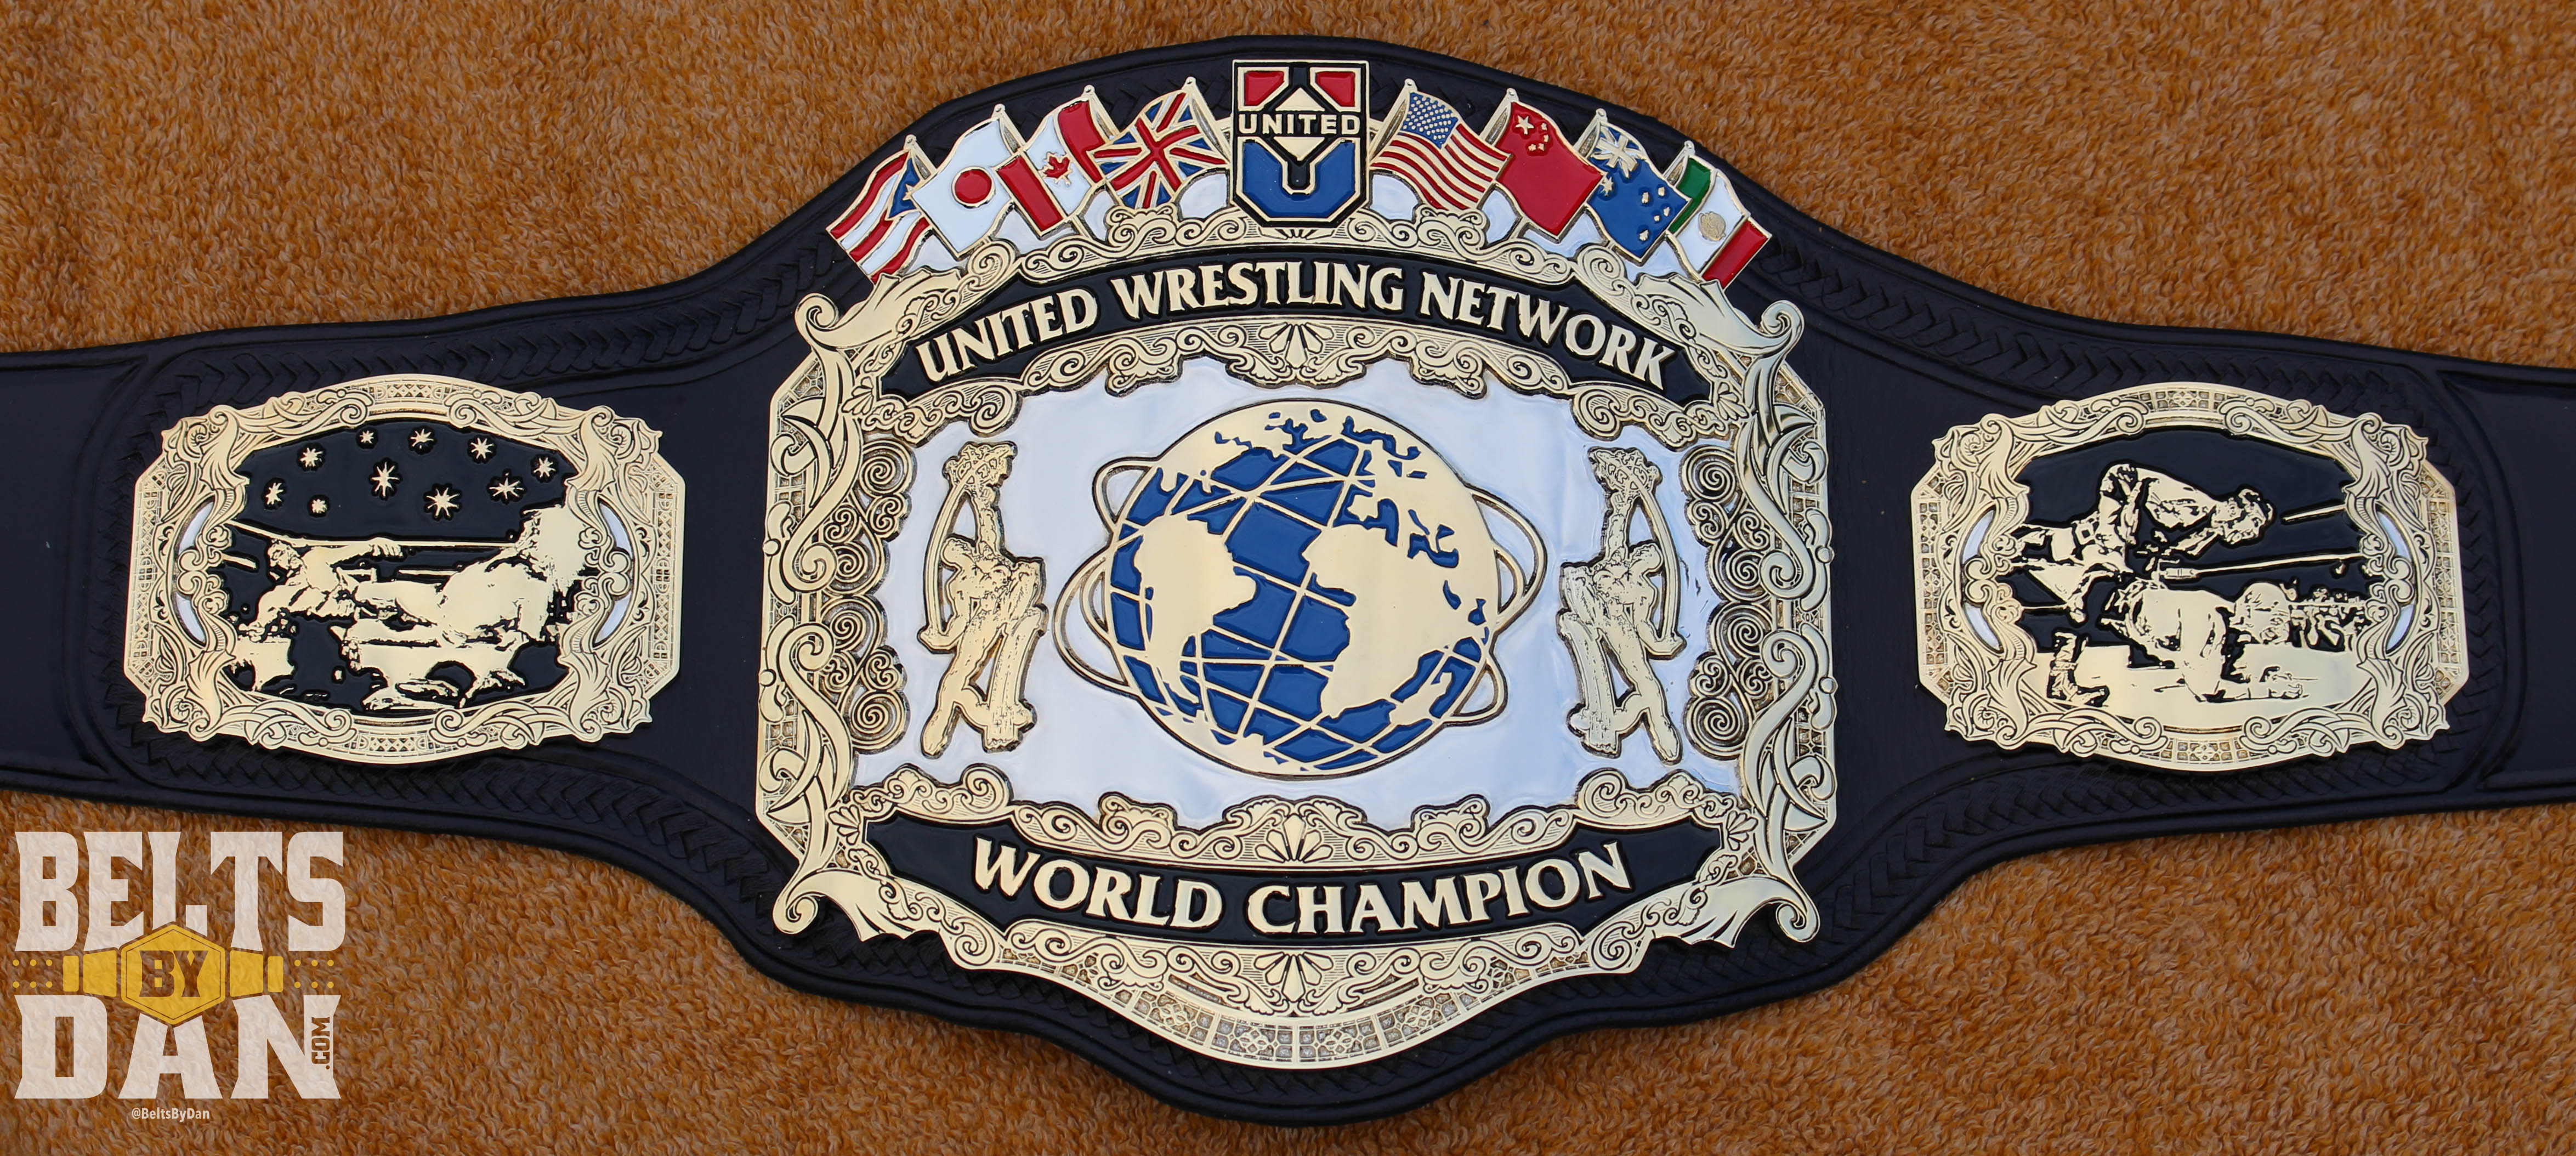 United Wrestling Network World Championship Belts by Dan